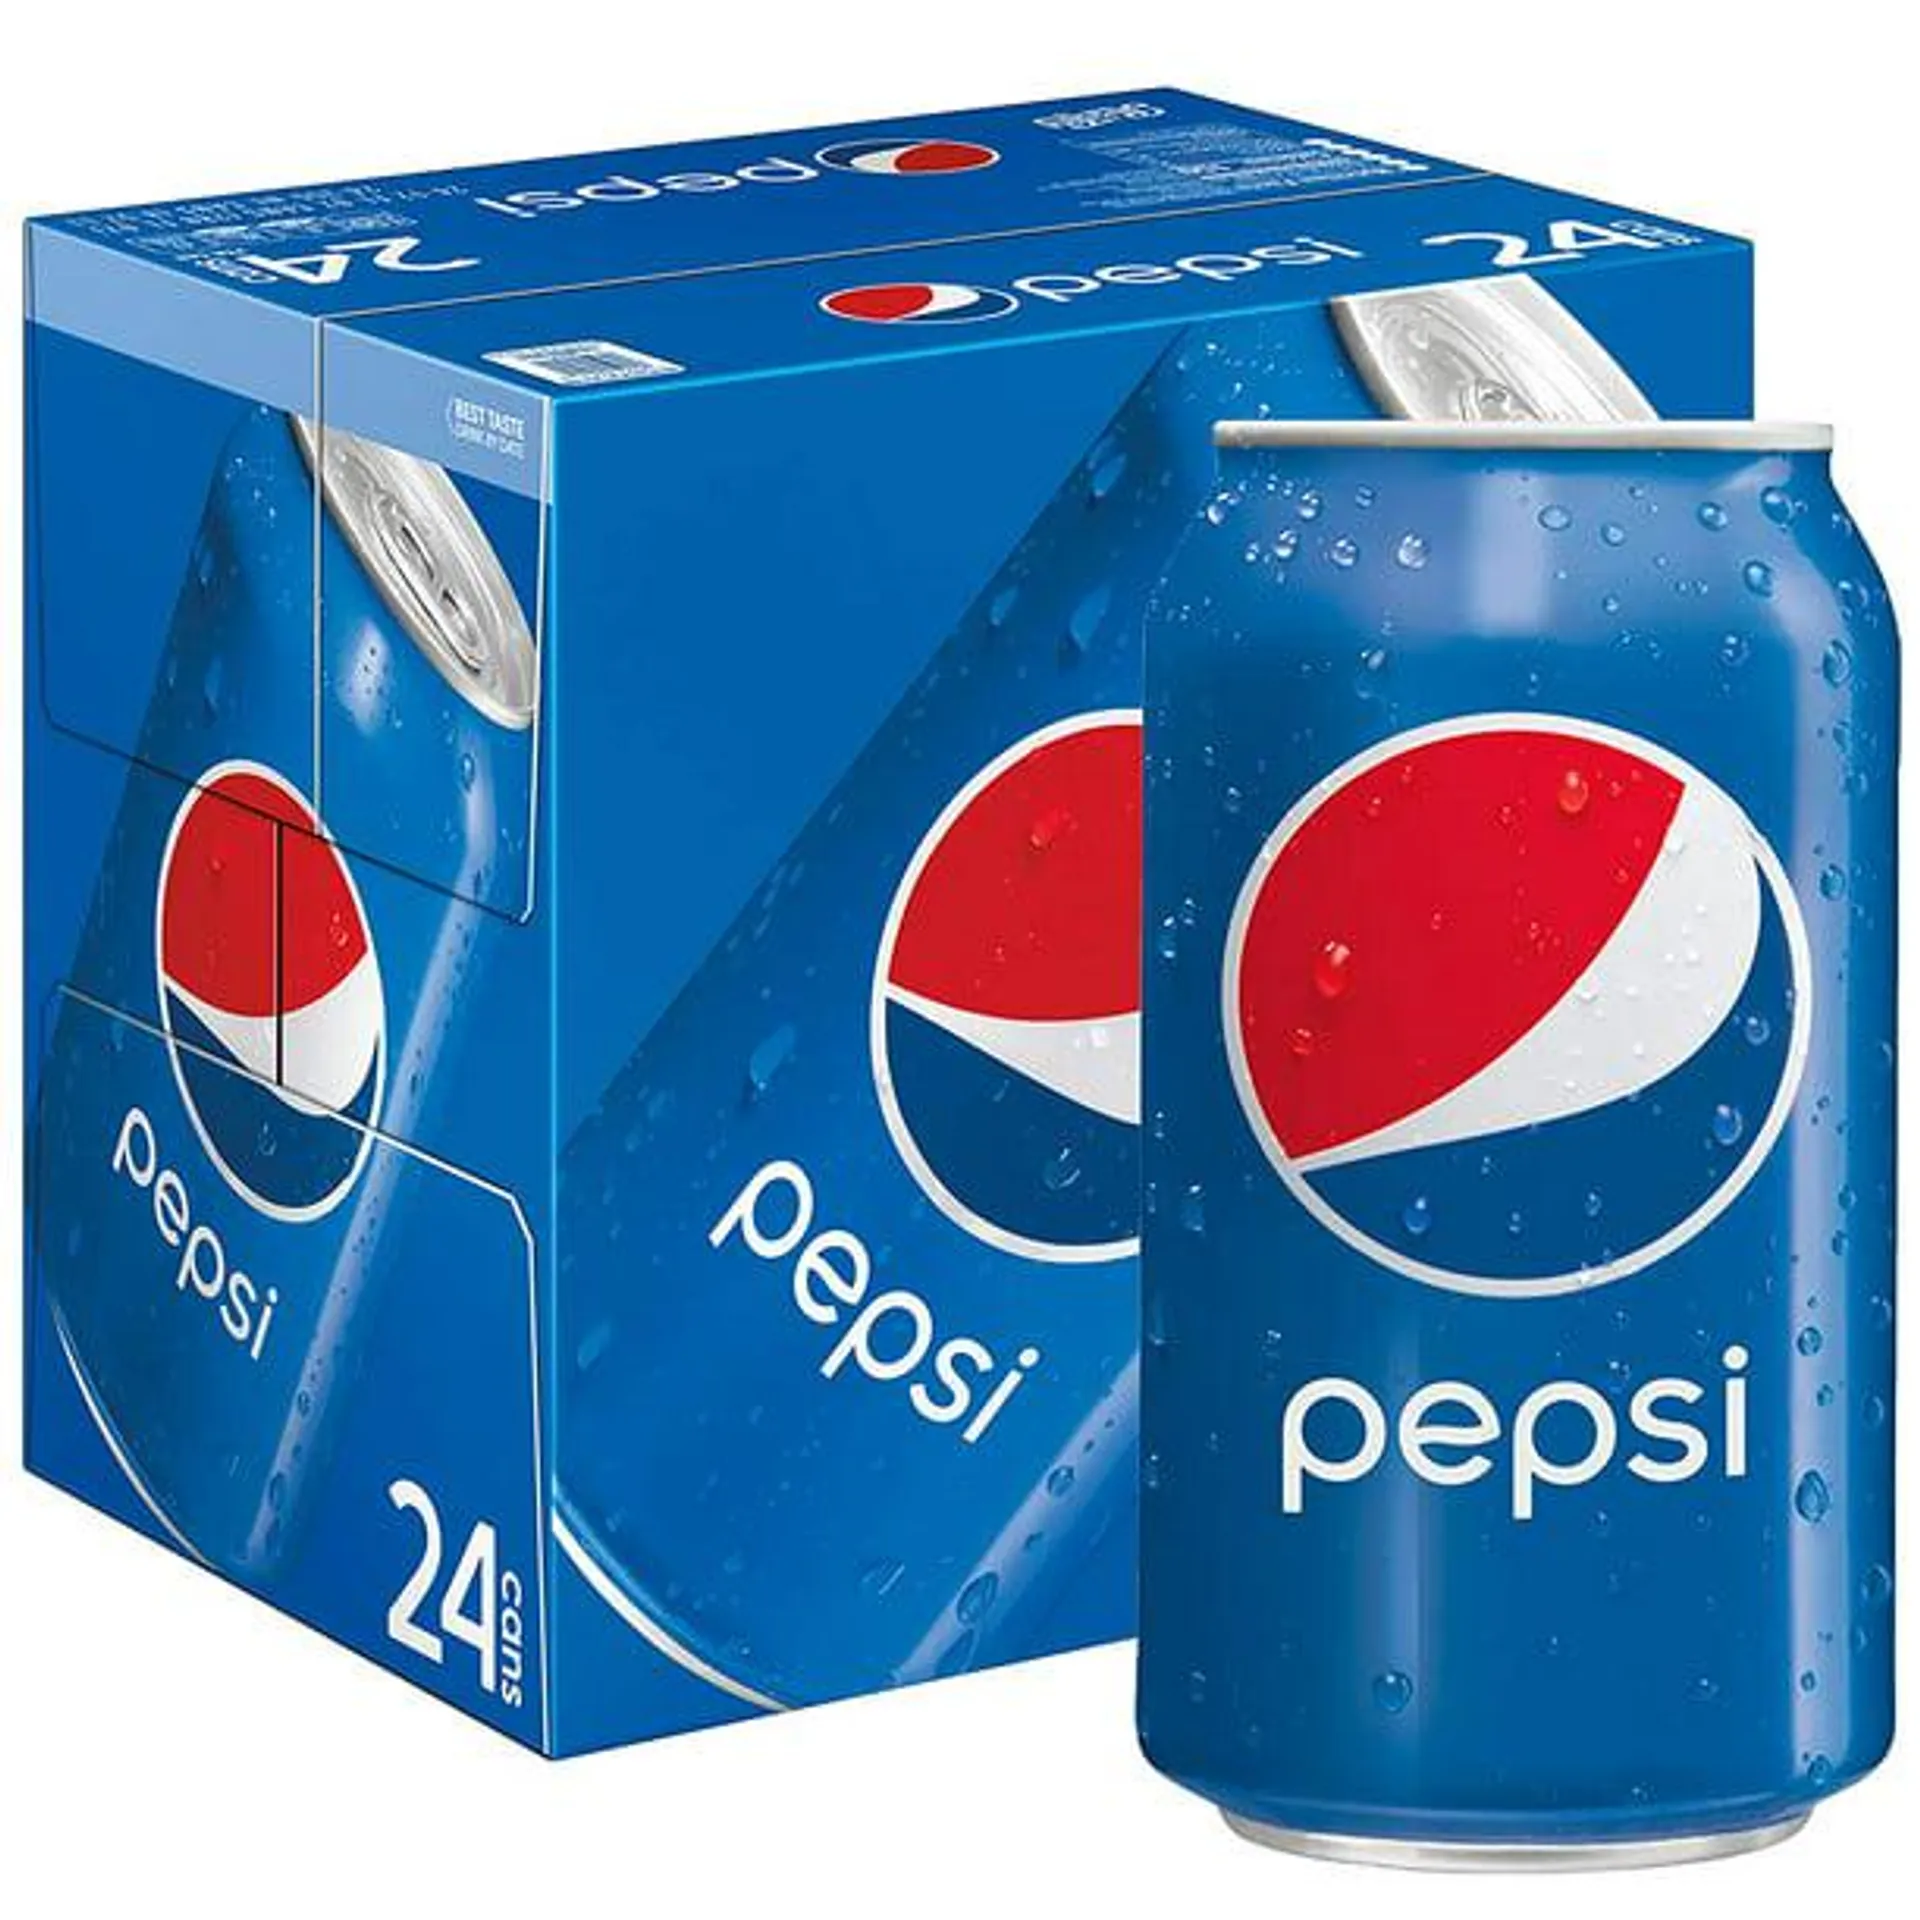 Pepsi Cola Soda Pop, 12 oz Cans, 24 Pack